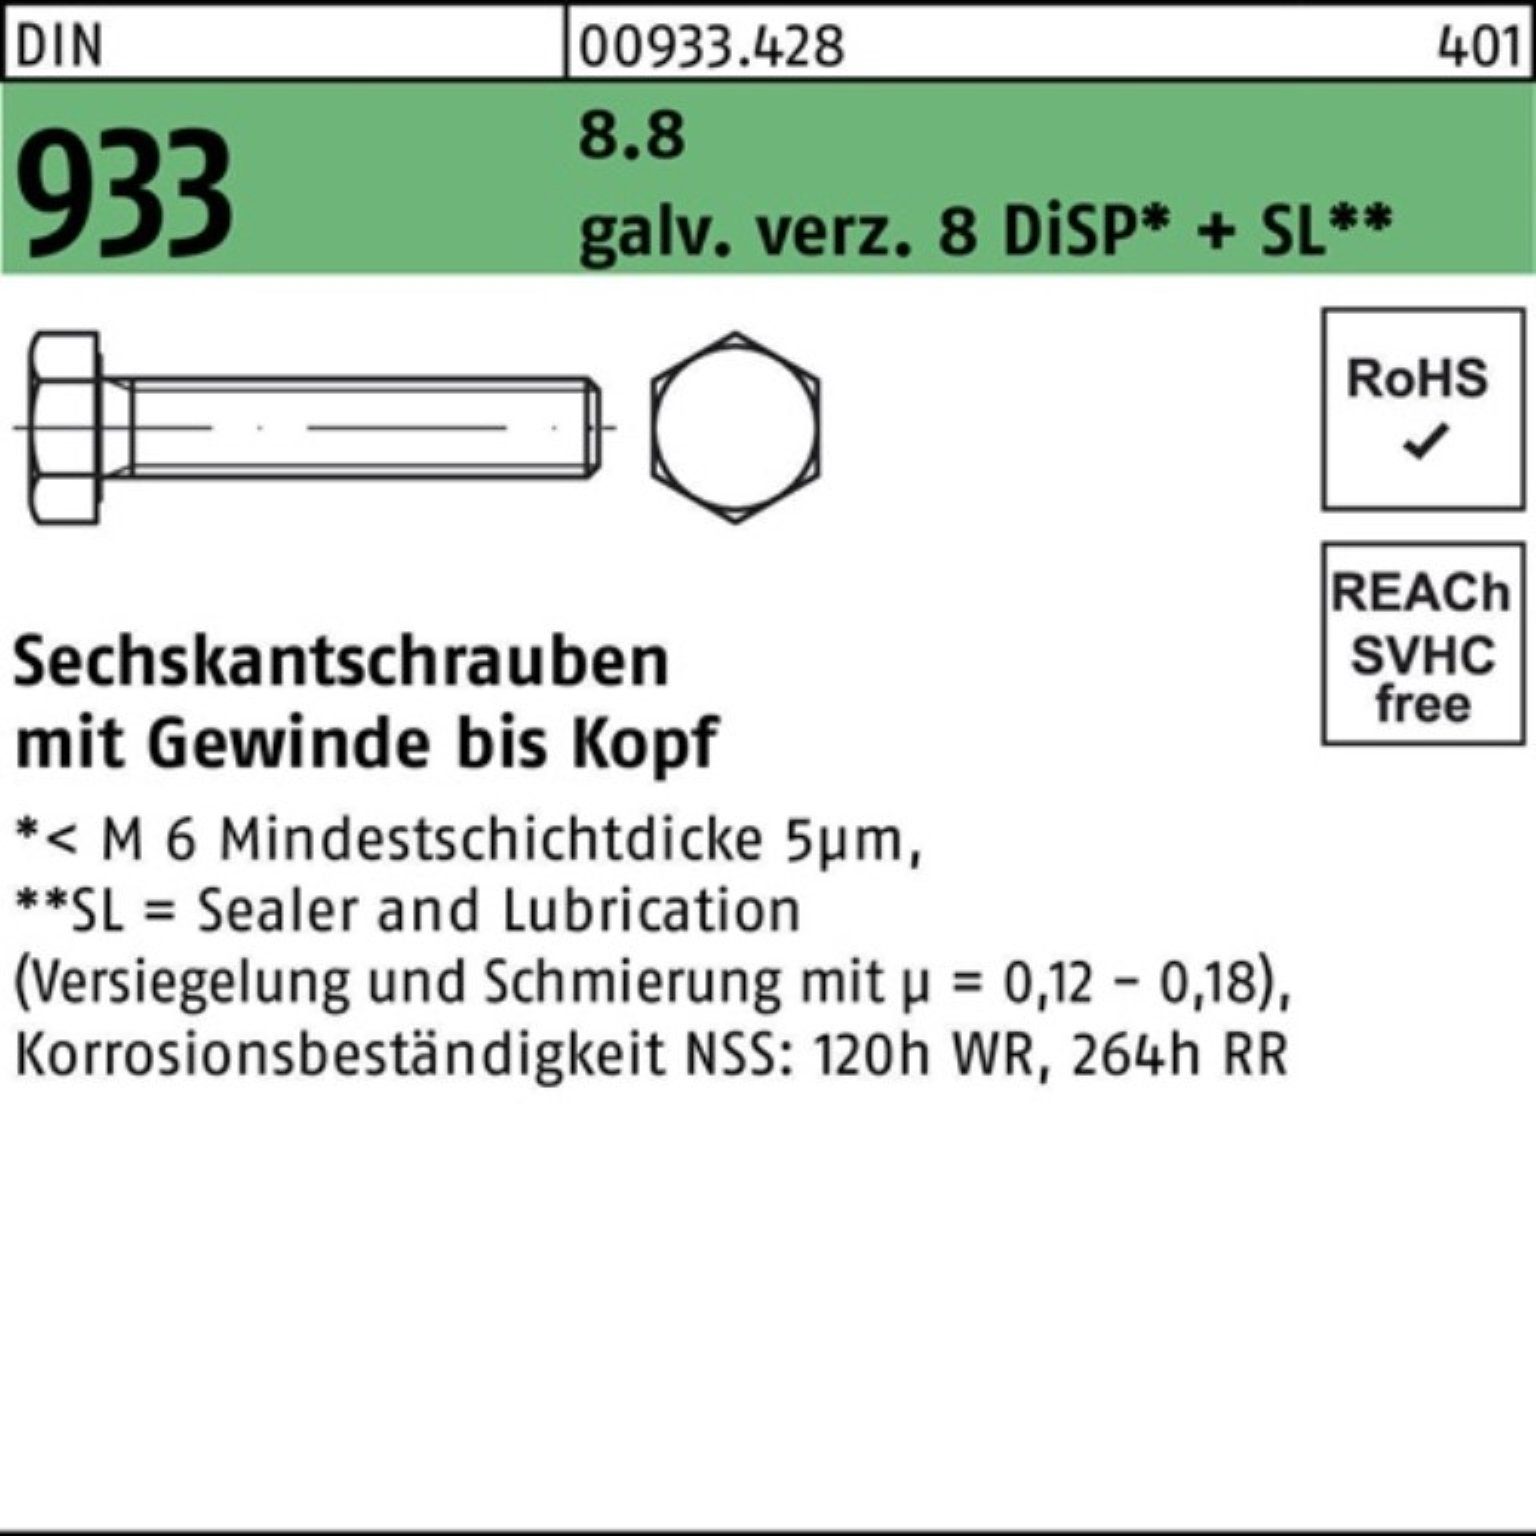 VG gal Reyher 8 DiSP 200er + Zn DIN Pack Sechskantschraube 933 M6x 8.8 70 Sechskantschraube SL